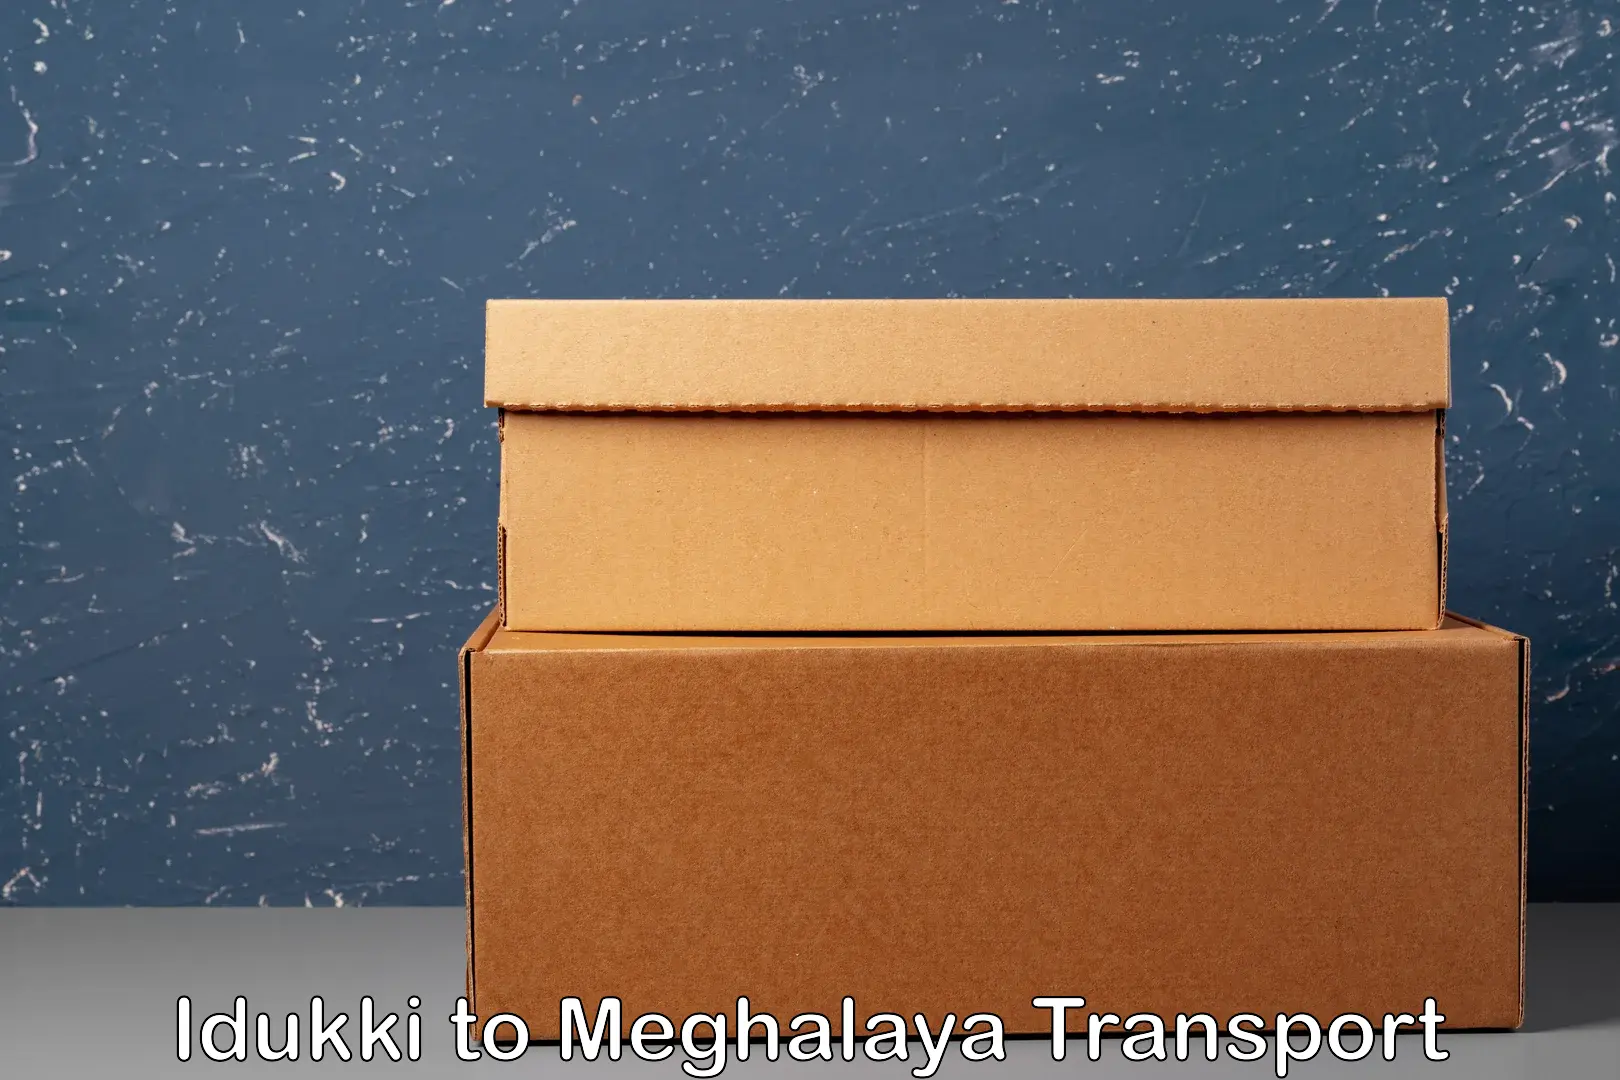 Bike transport service Idukki to Meghalaya